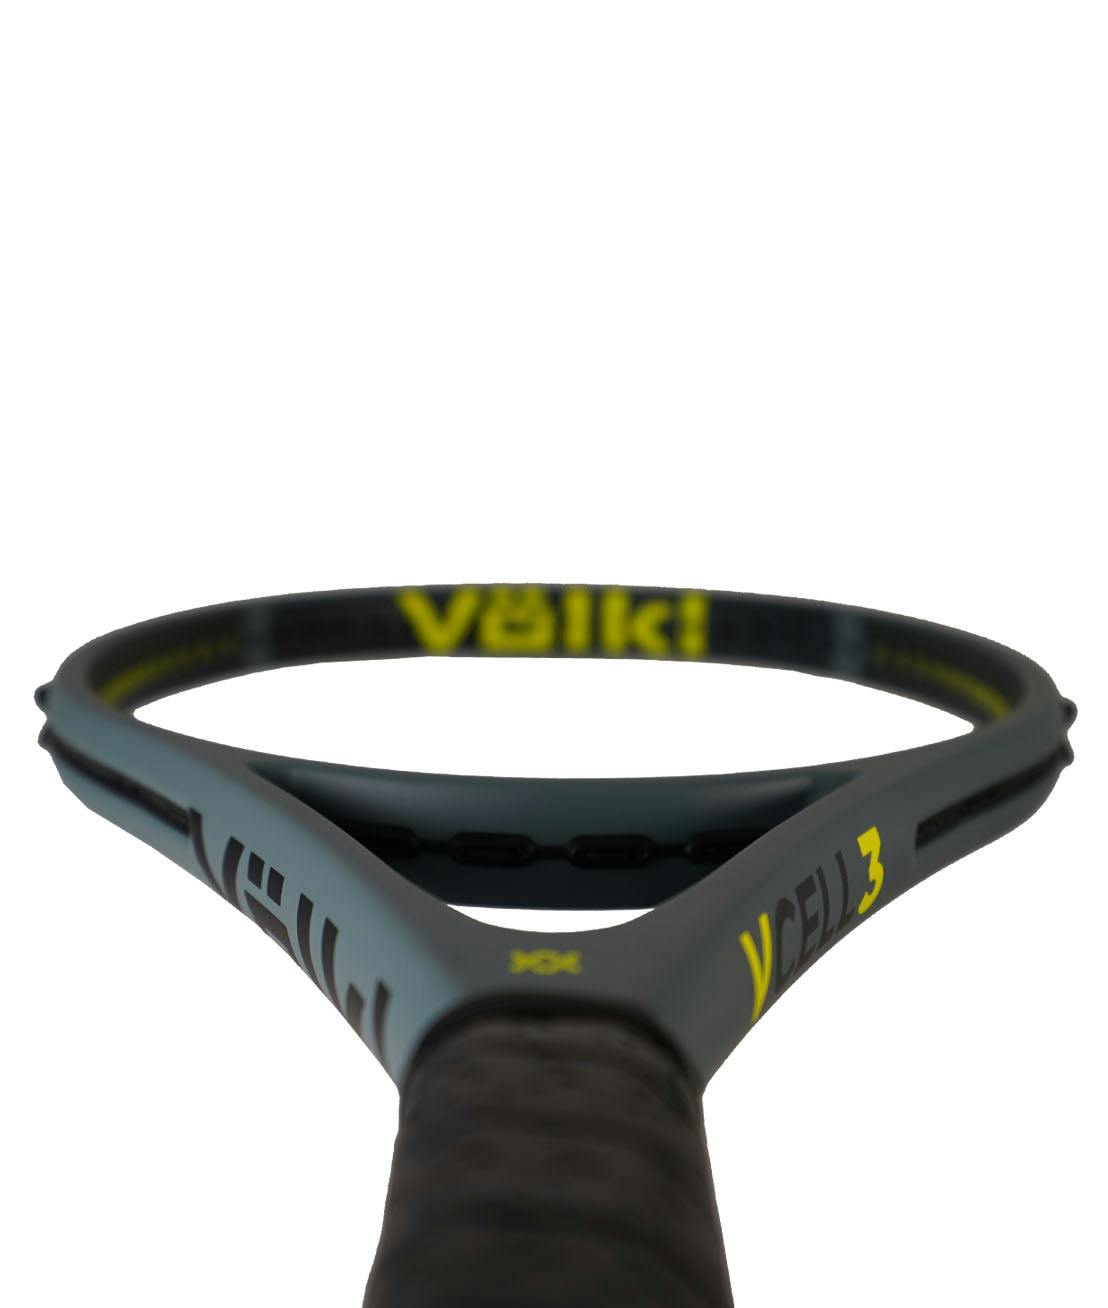 Volkl V-Cell 3 Racquet · Unstrung